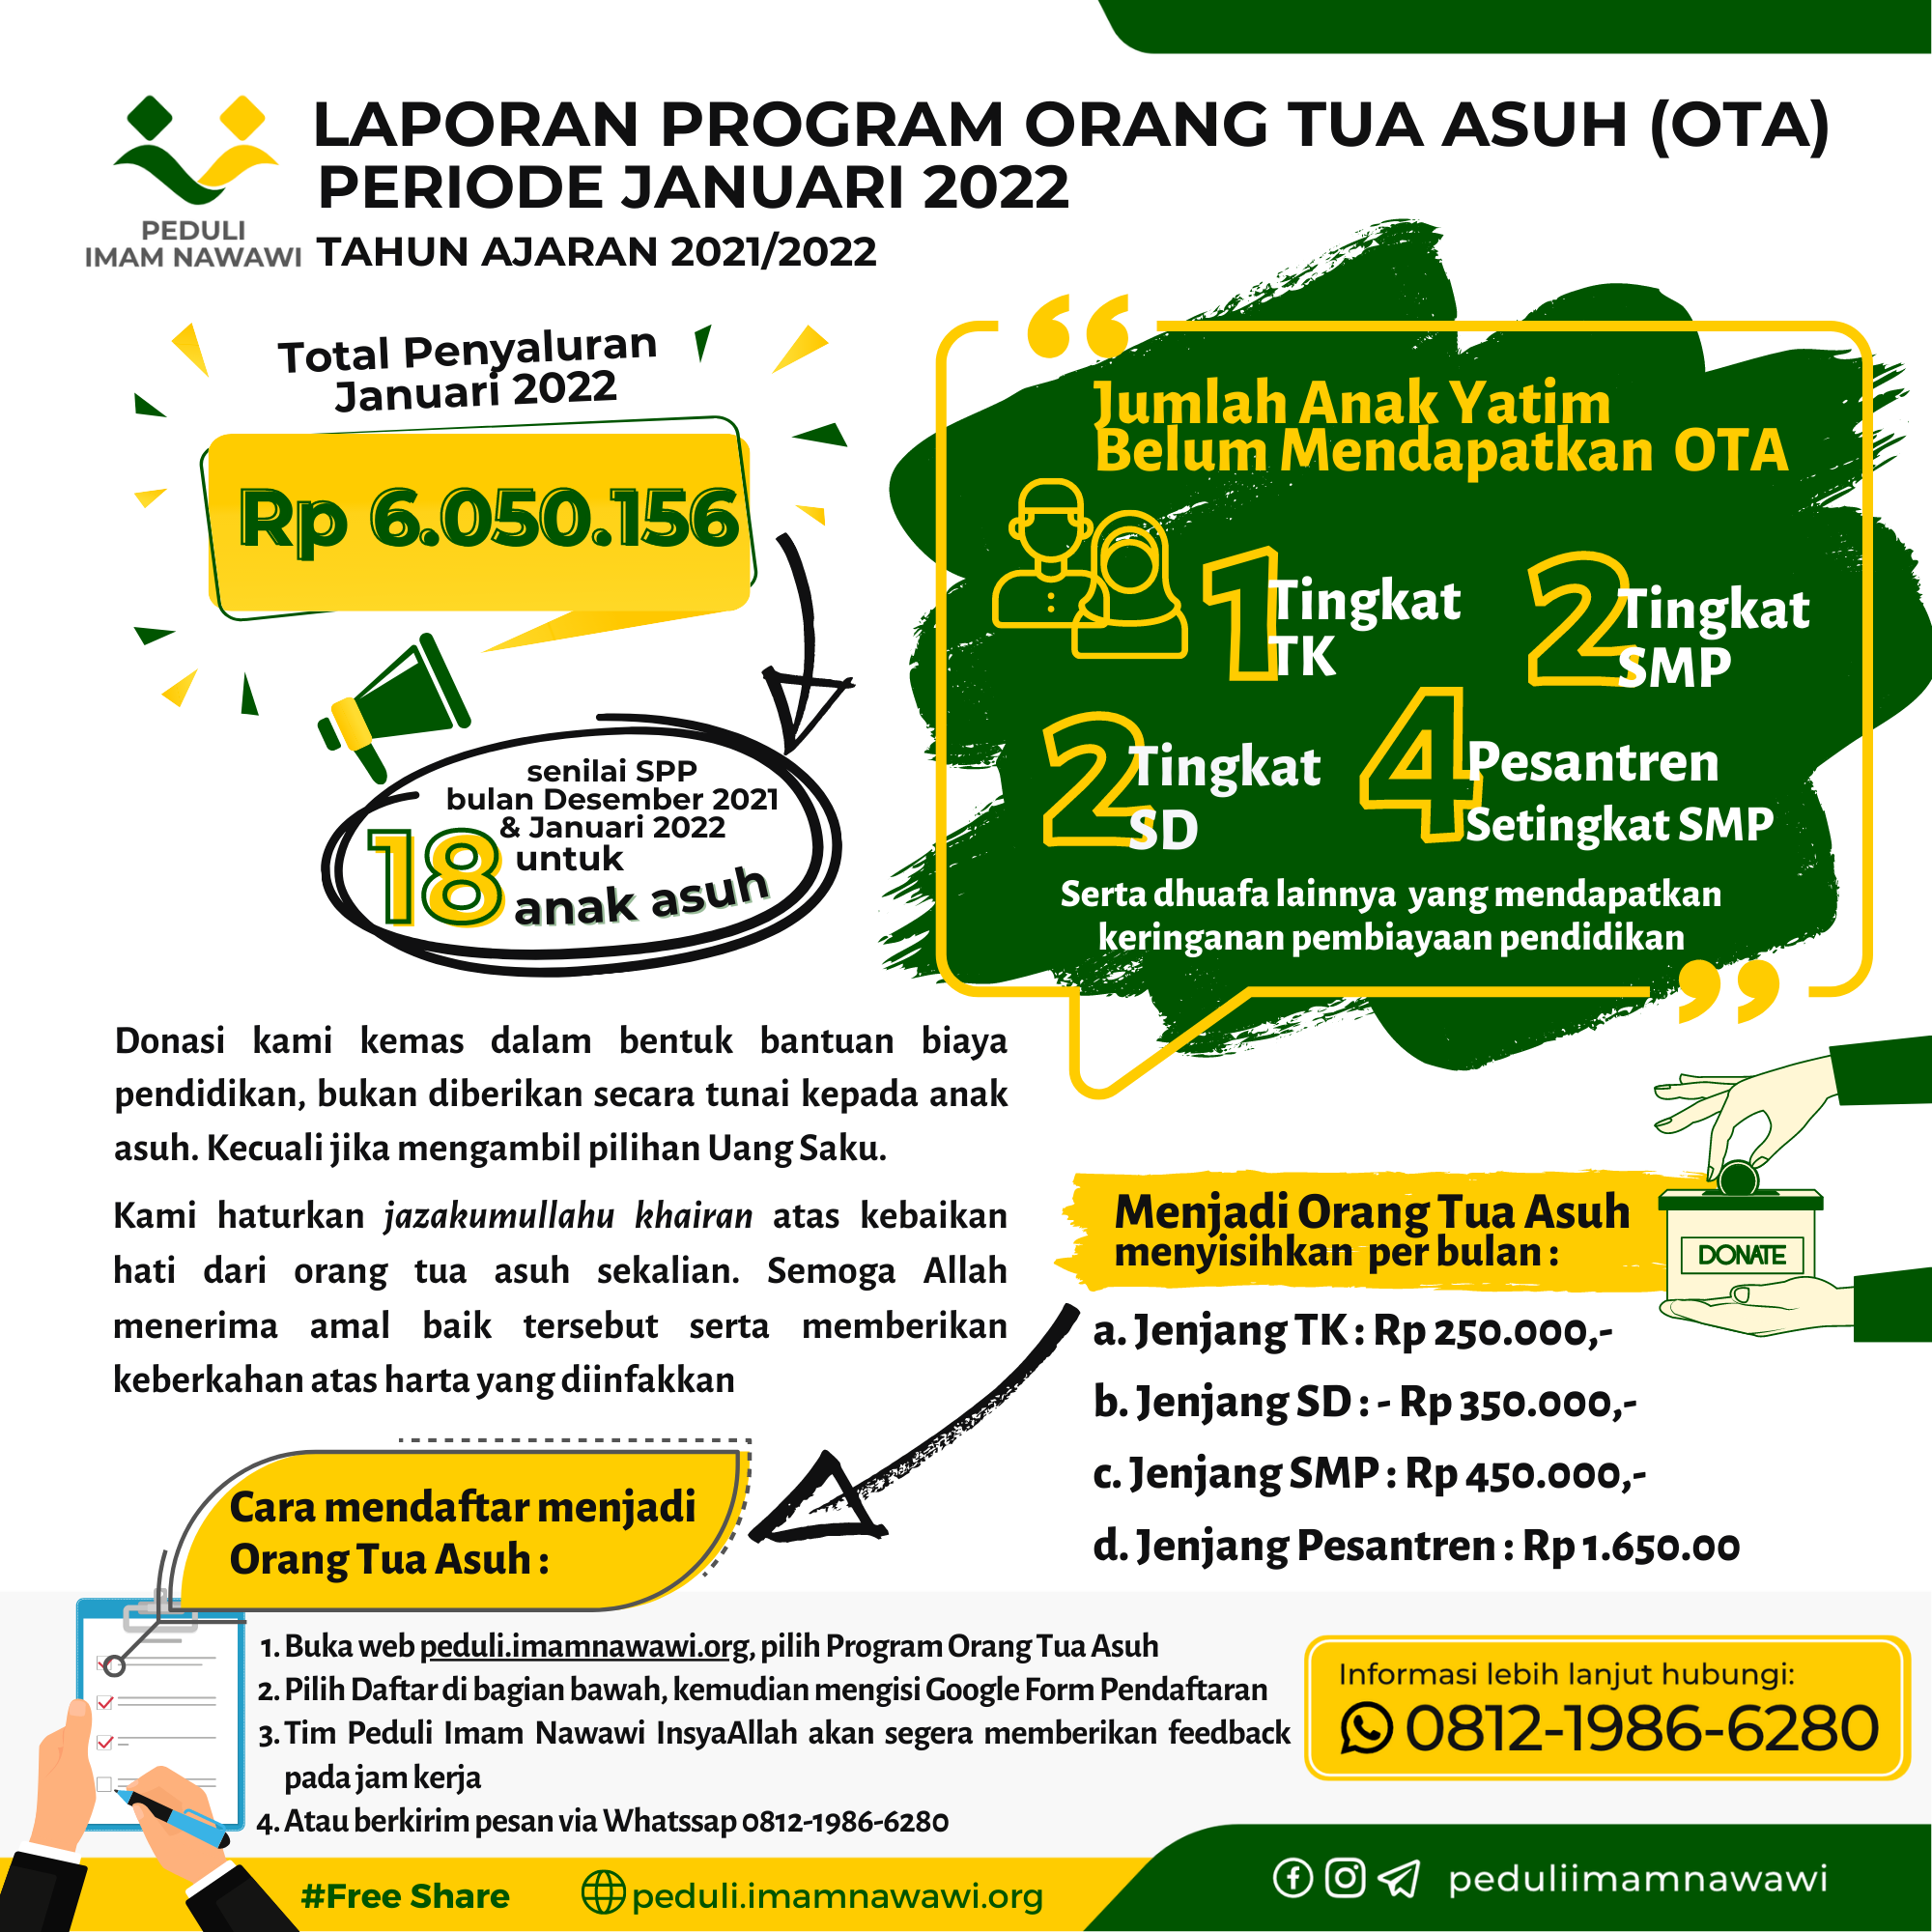 You are currently viewing Laporan Program Orang Tua Asuh Periode Januari 2022